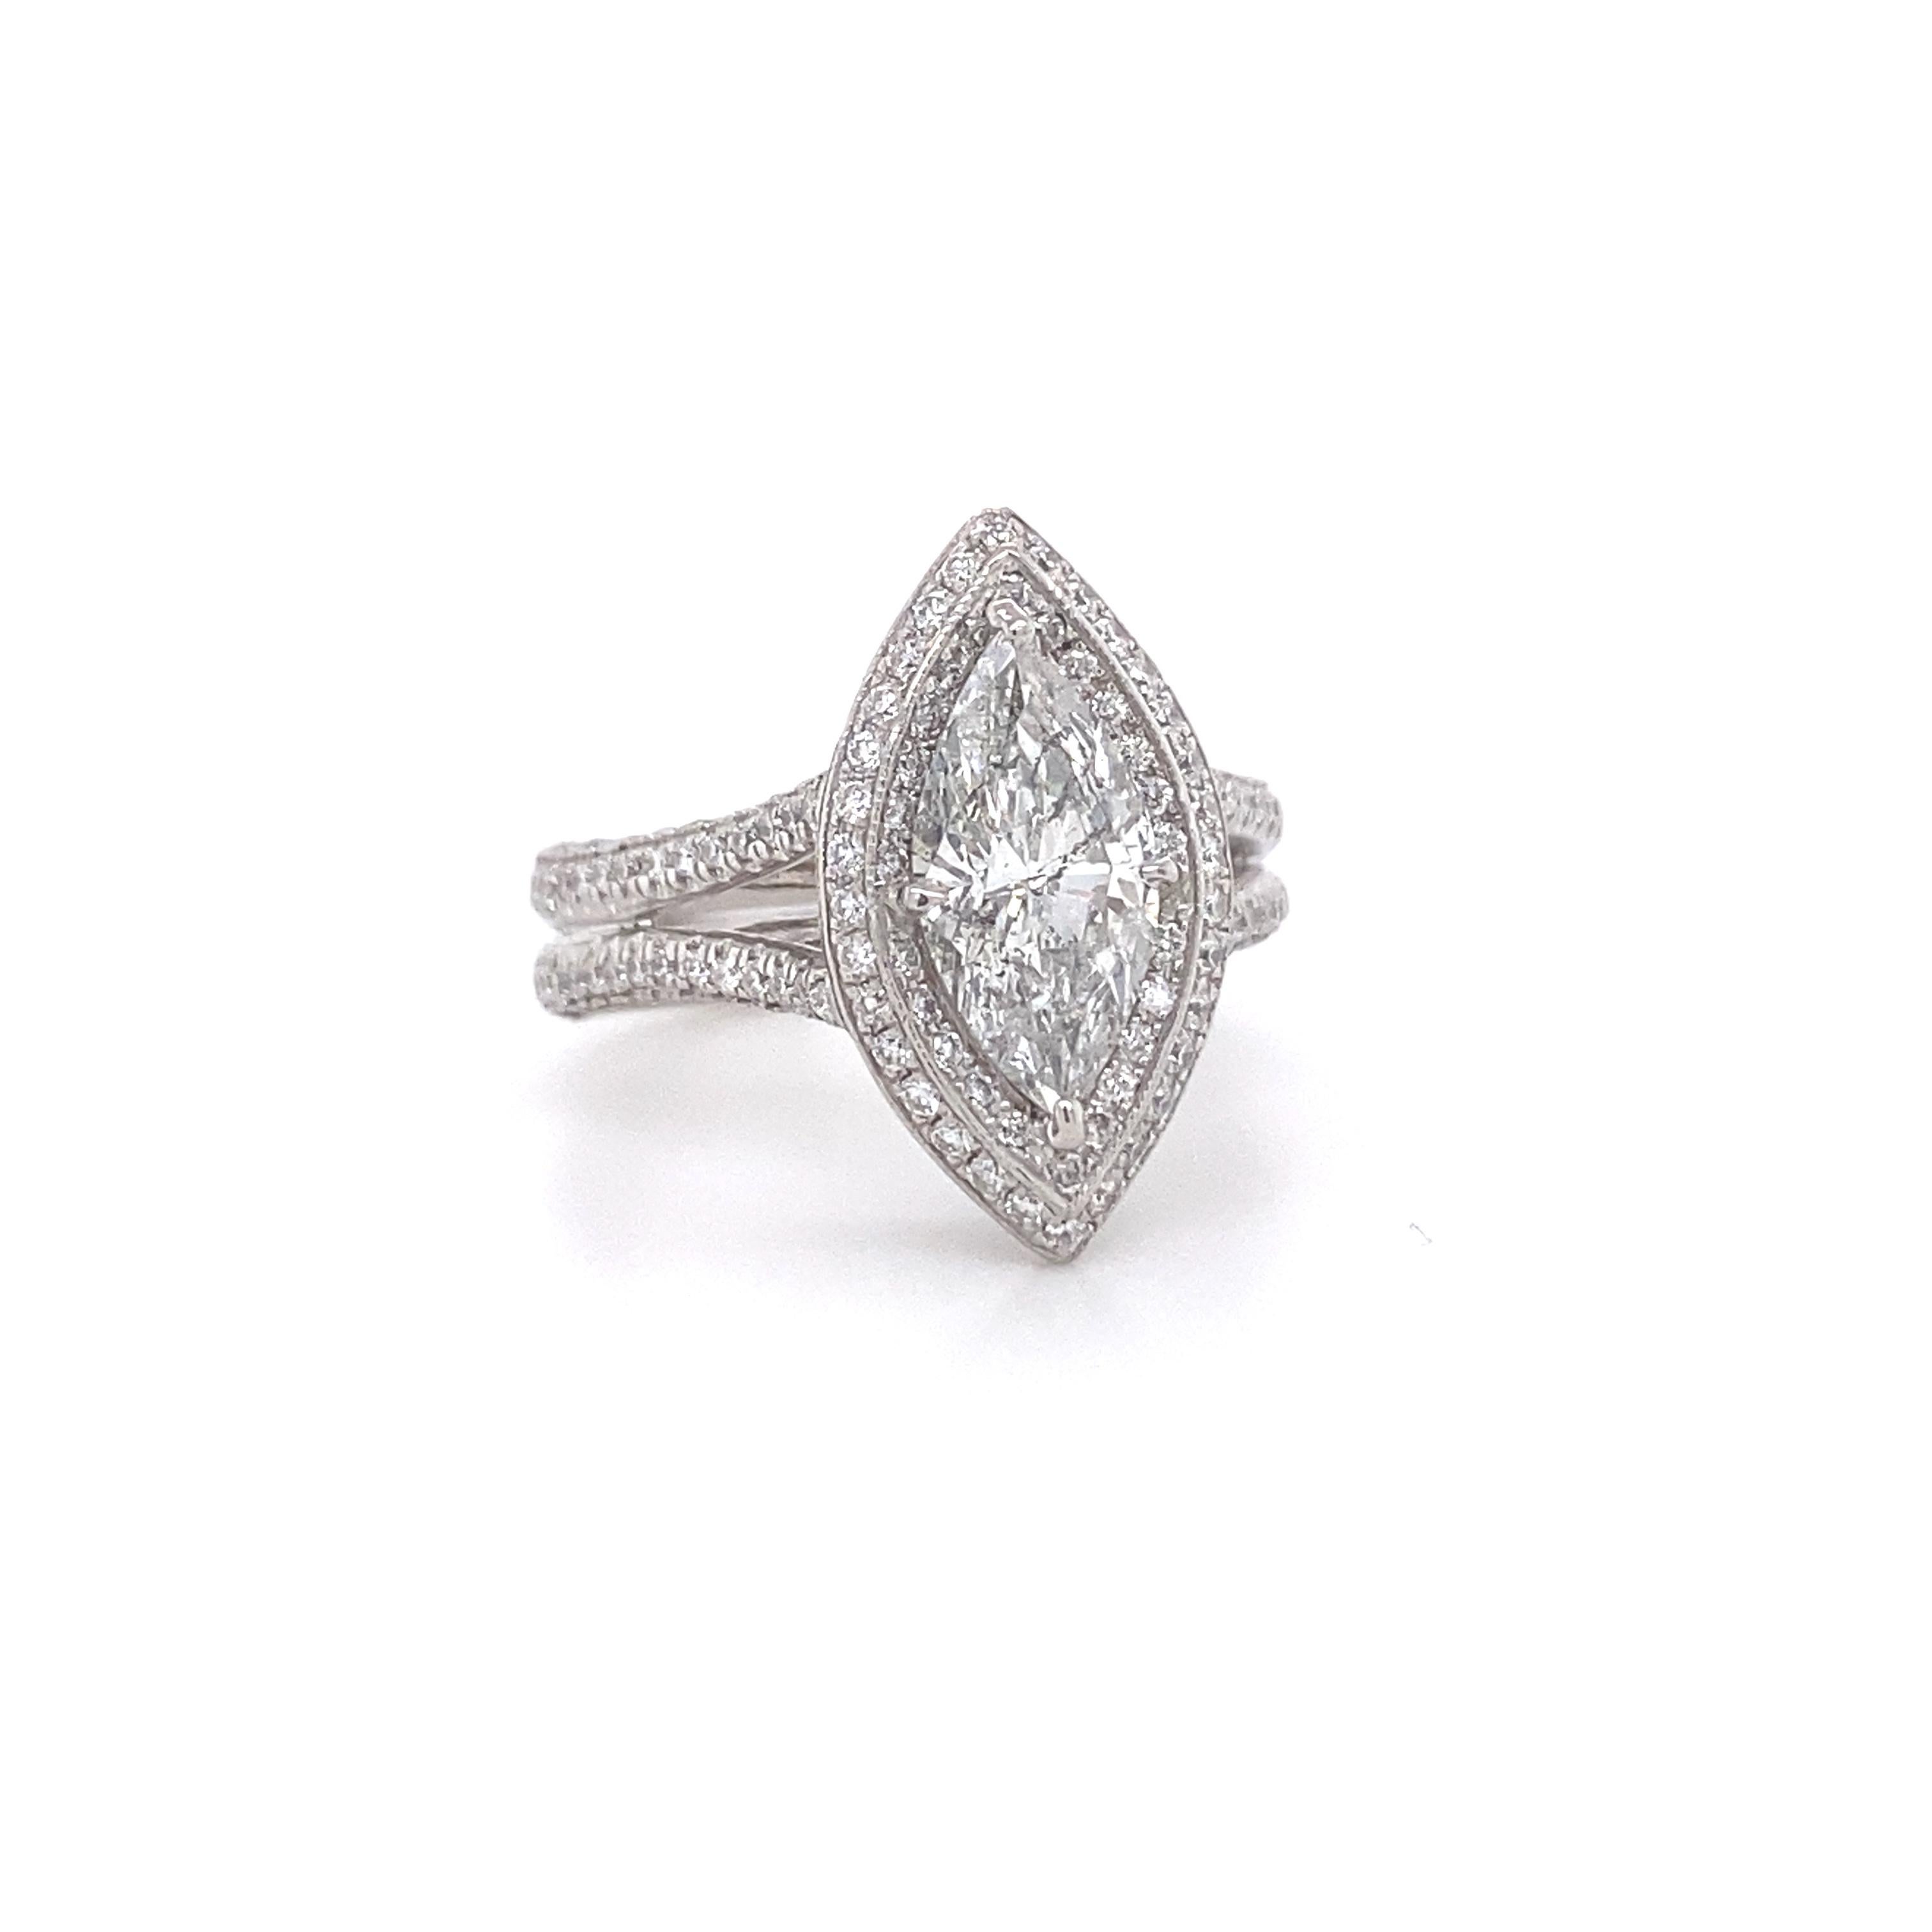 J.B. Star Marquise Diamond 2.35 Carat Diamond Engagement Ring Platinum 7